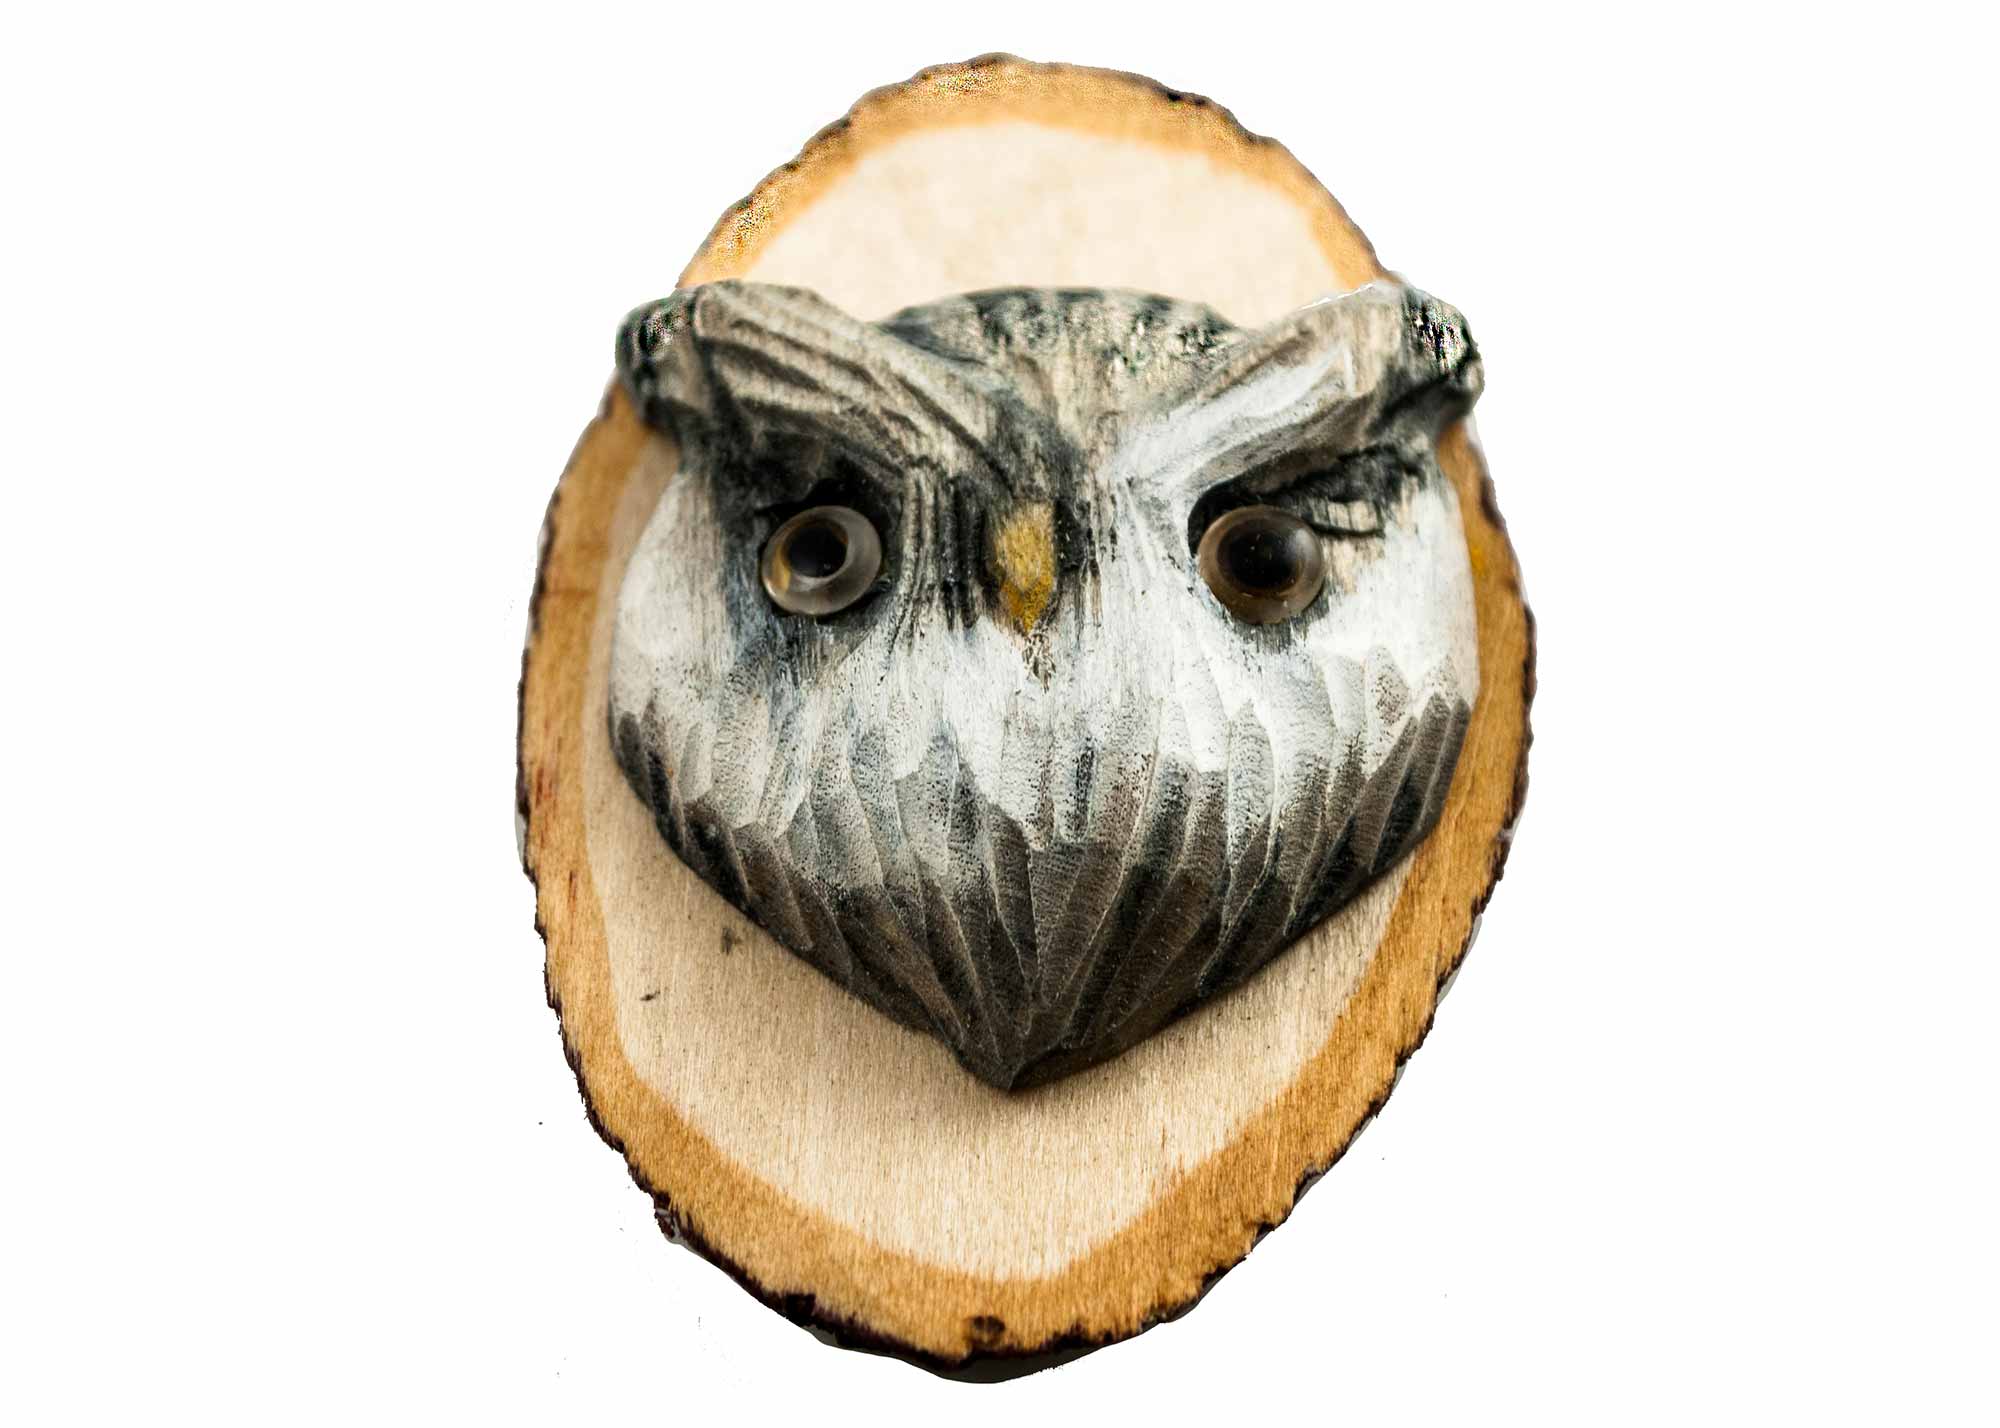 Buy Great Grey Owl Wildlife Magnet at GoldenCockerel.com